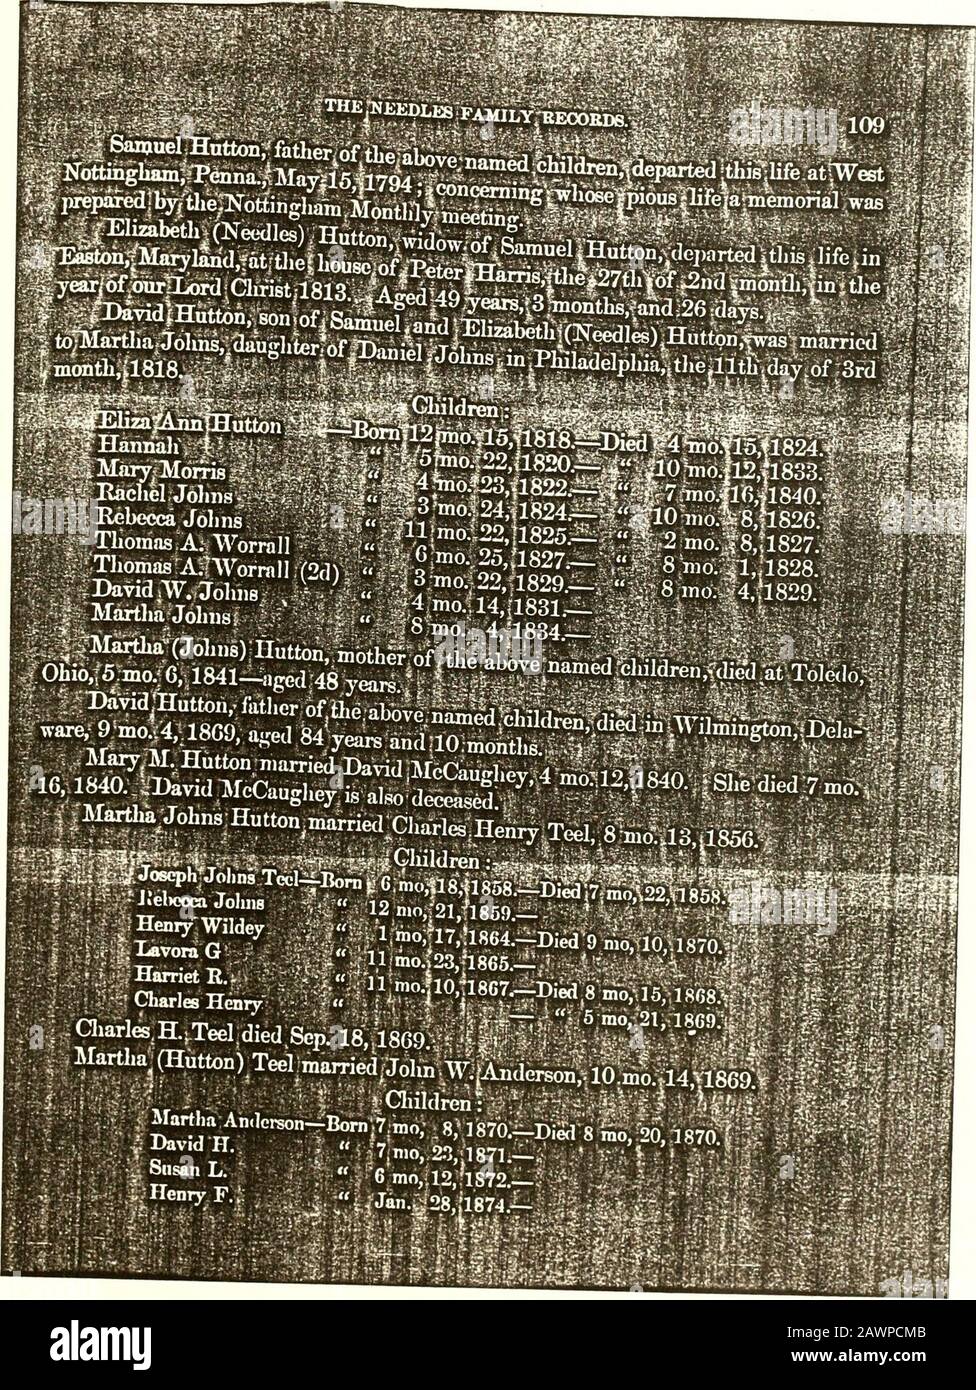 Record of the Man, Needles (Nedels) and Hambleton families...1495-1876 . 5, of jtlie family; of Casdrops^TOin^Holland. ;r iMvCffimnw? ^slioultTbe Casdbrp.;v J j (Casdorp foGaBd^j^J^ i^obalW || thejcorrect,name. .Theitemina^ion^aorf,^villa^.or hamleiyin:German *corre£^ |ponding to IhejEnglish^ton^R:)^^: ;V ., j* $.  ^ -%^-: | • &gt;,Children:   || V//, -1 Anna -Needles.^Born 9Wi24l785^abbut3 A:M. oh itKdayX^V^^-v*??* £MarriedI)eborahHamb]eton;a^ SJulianna; I :fBorn7;mo.&gt;22;-17934« Ipiqbf 2nd^yiM^fel*4i&$&i1 KWilliam 3 Charles; Allen | Married LydiaHaines and SaTairM.Sfile^andwstilliiving, Stock Photo